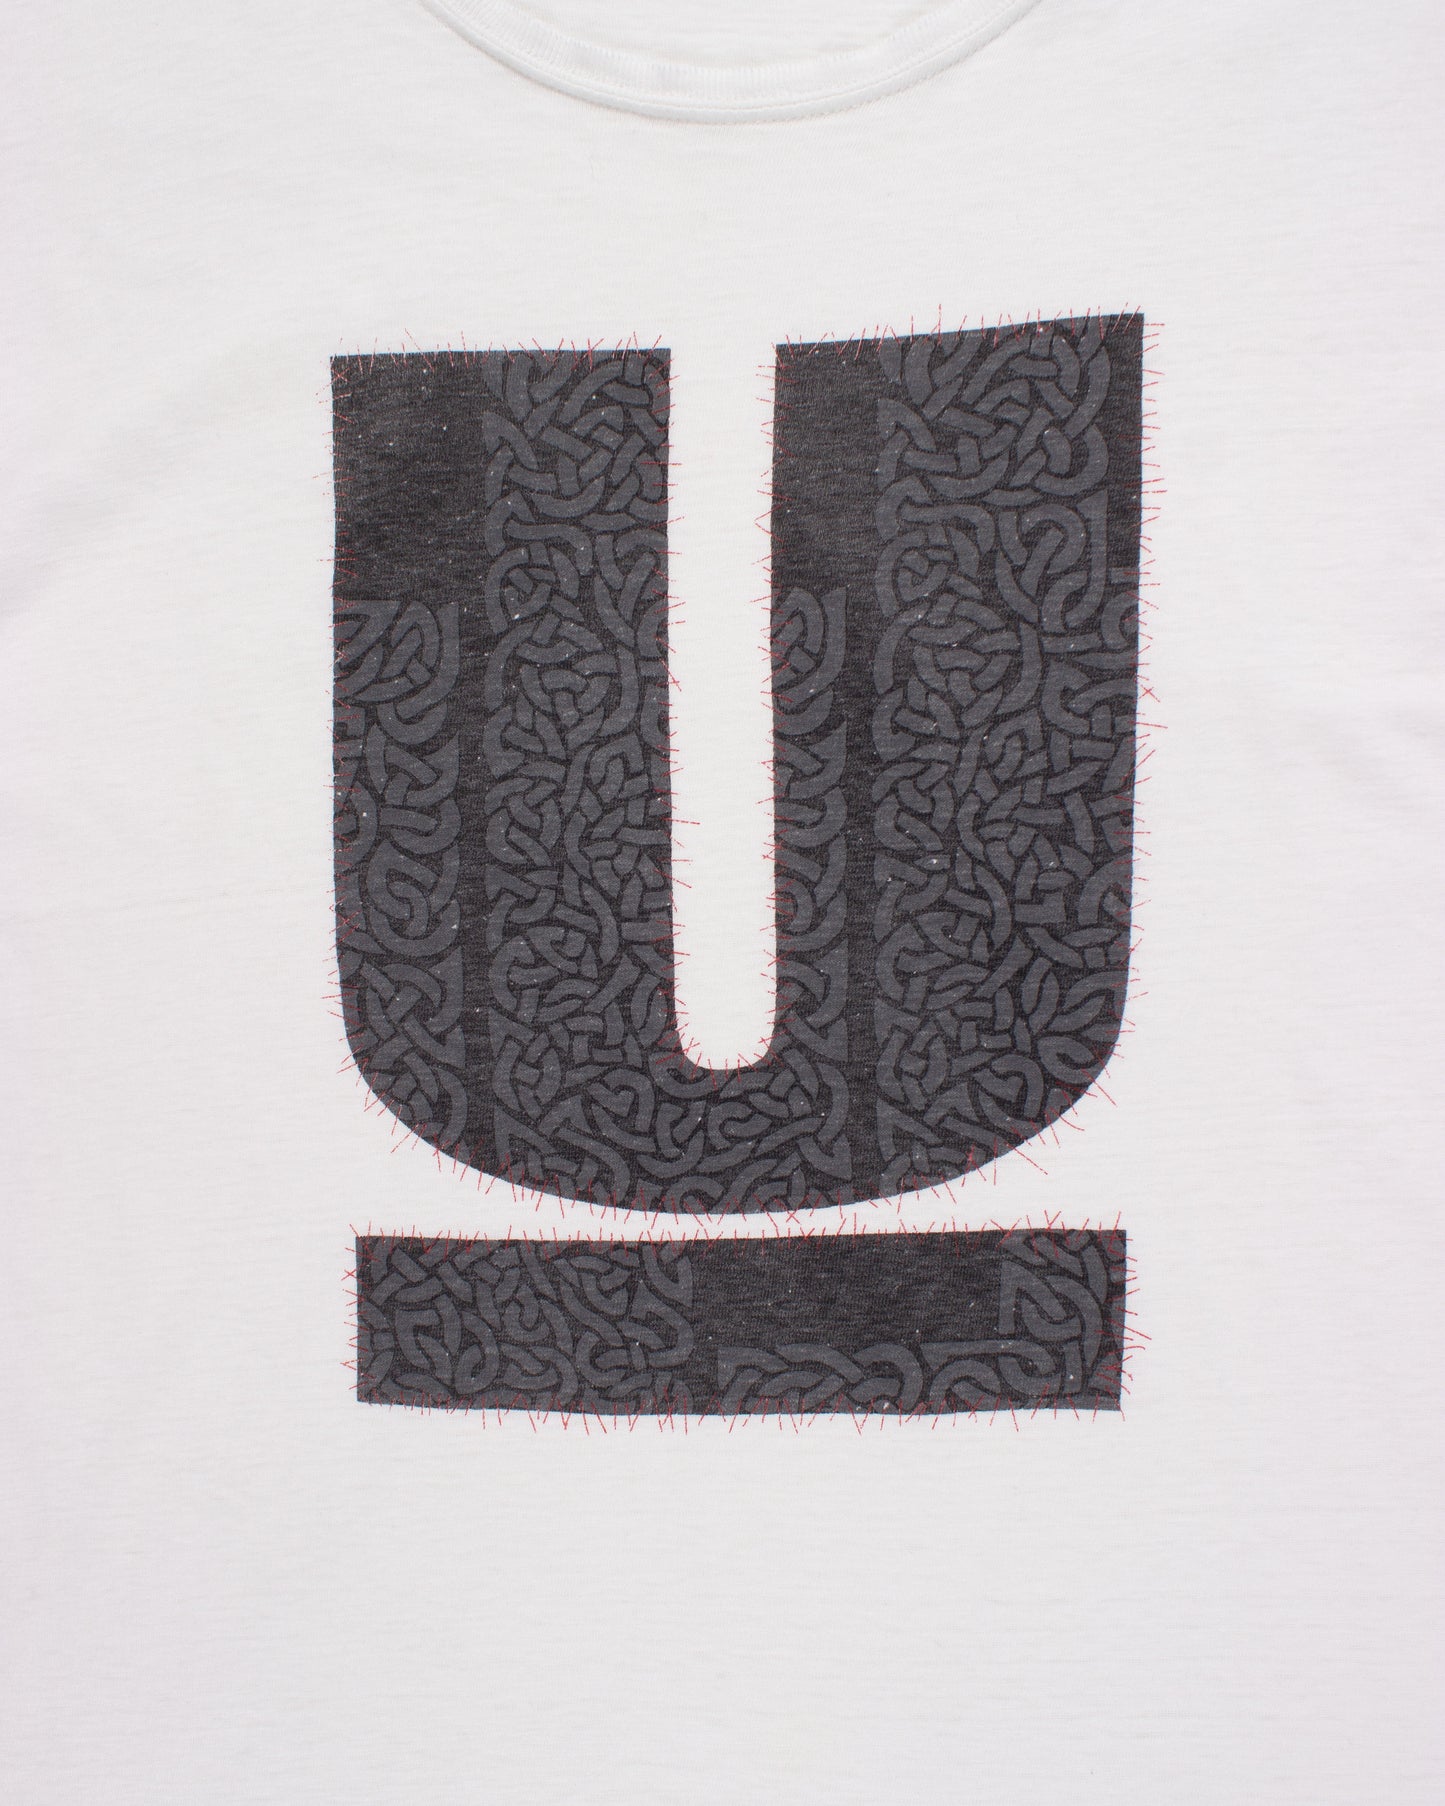 "U" Thorn Distressed T-shirt